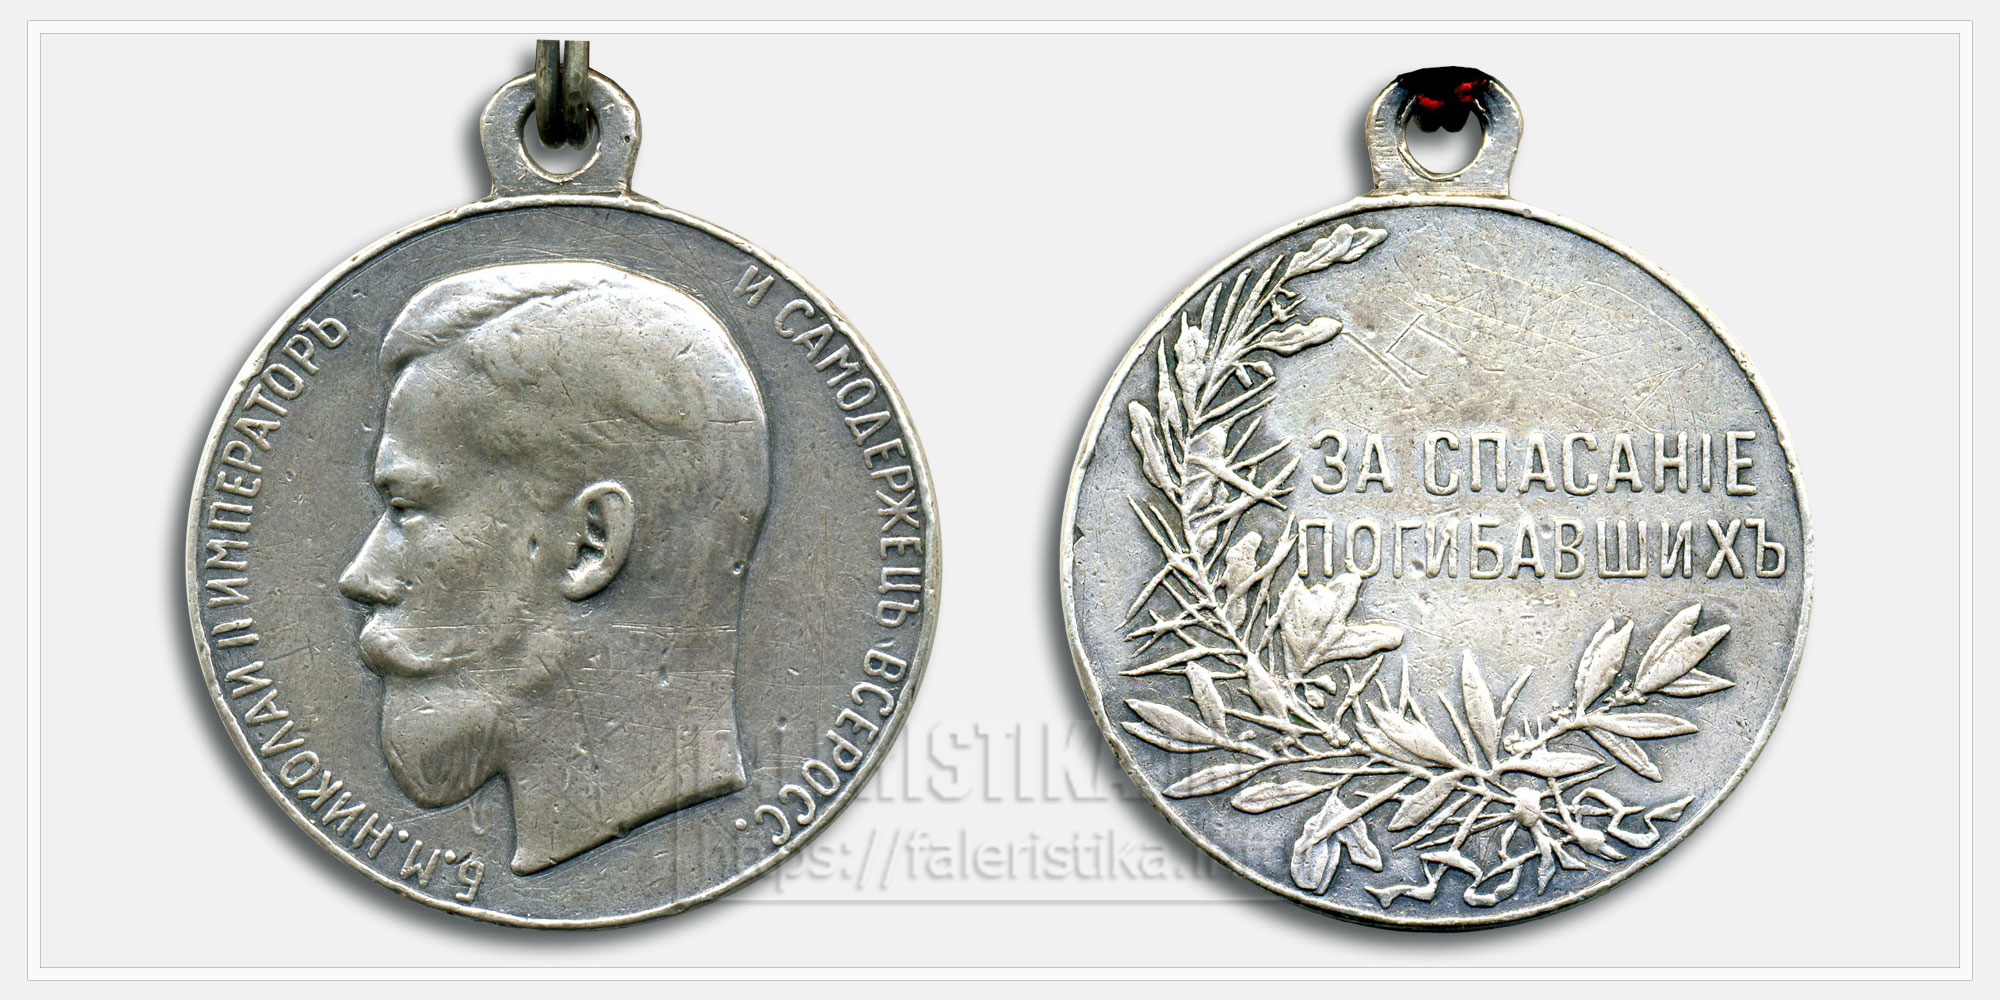 Медаль "За спасание погибавших" Николай II